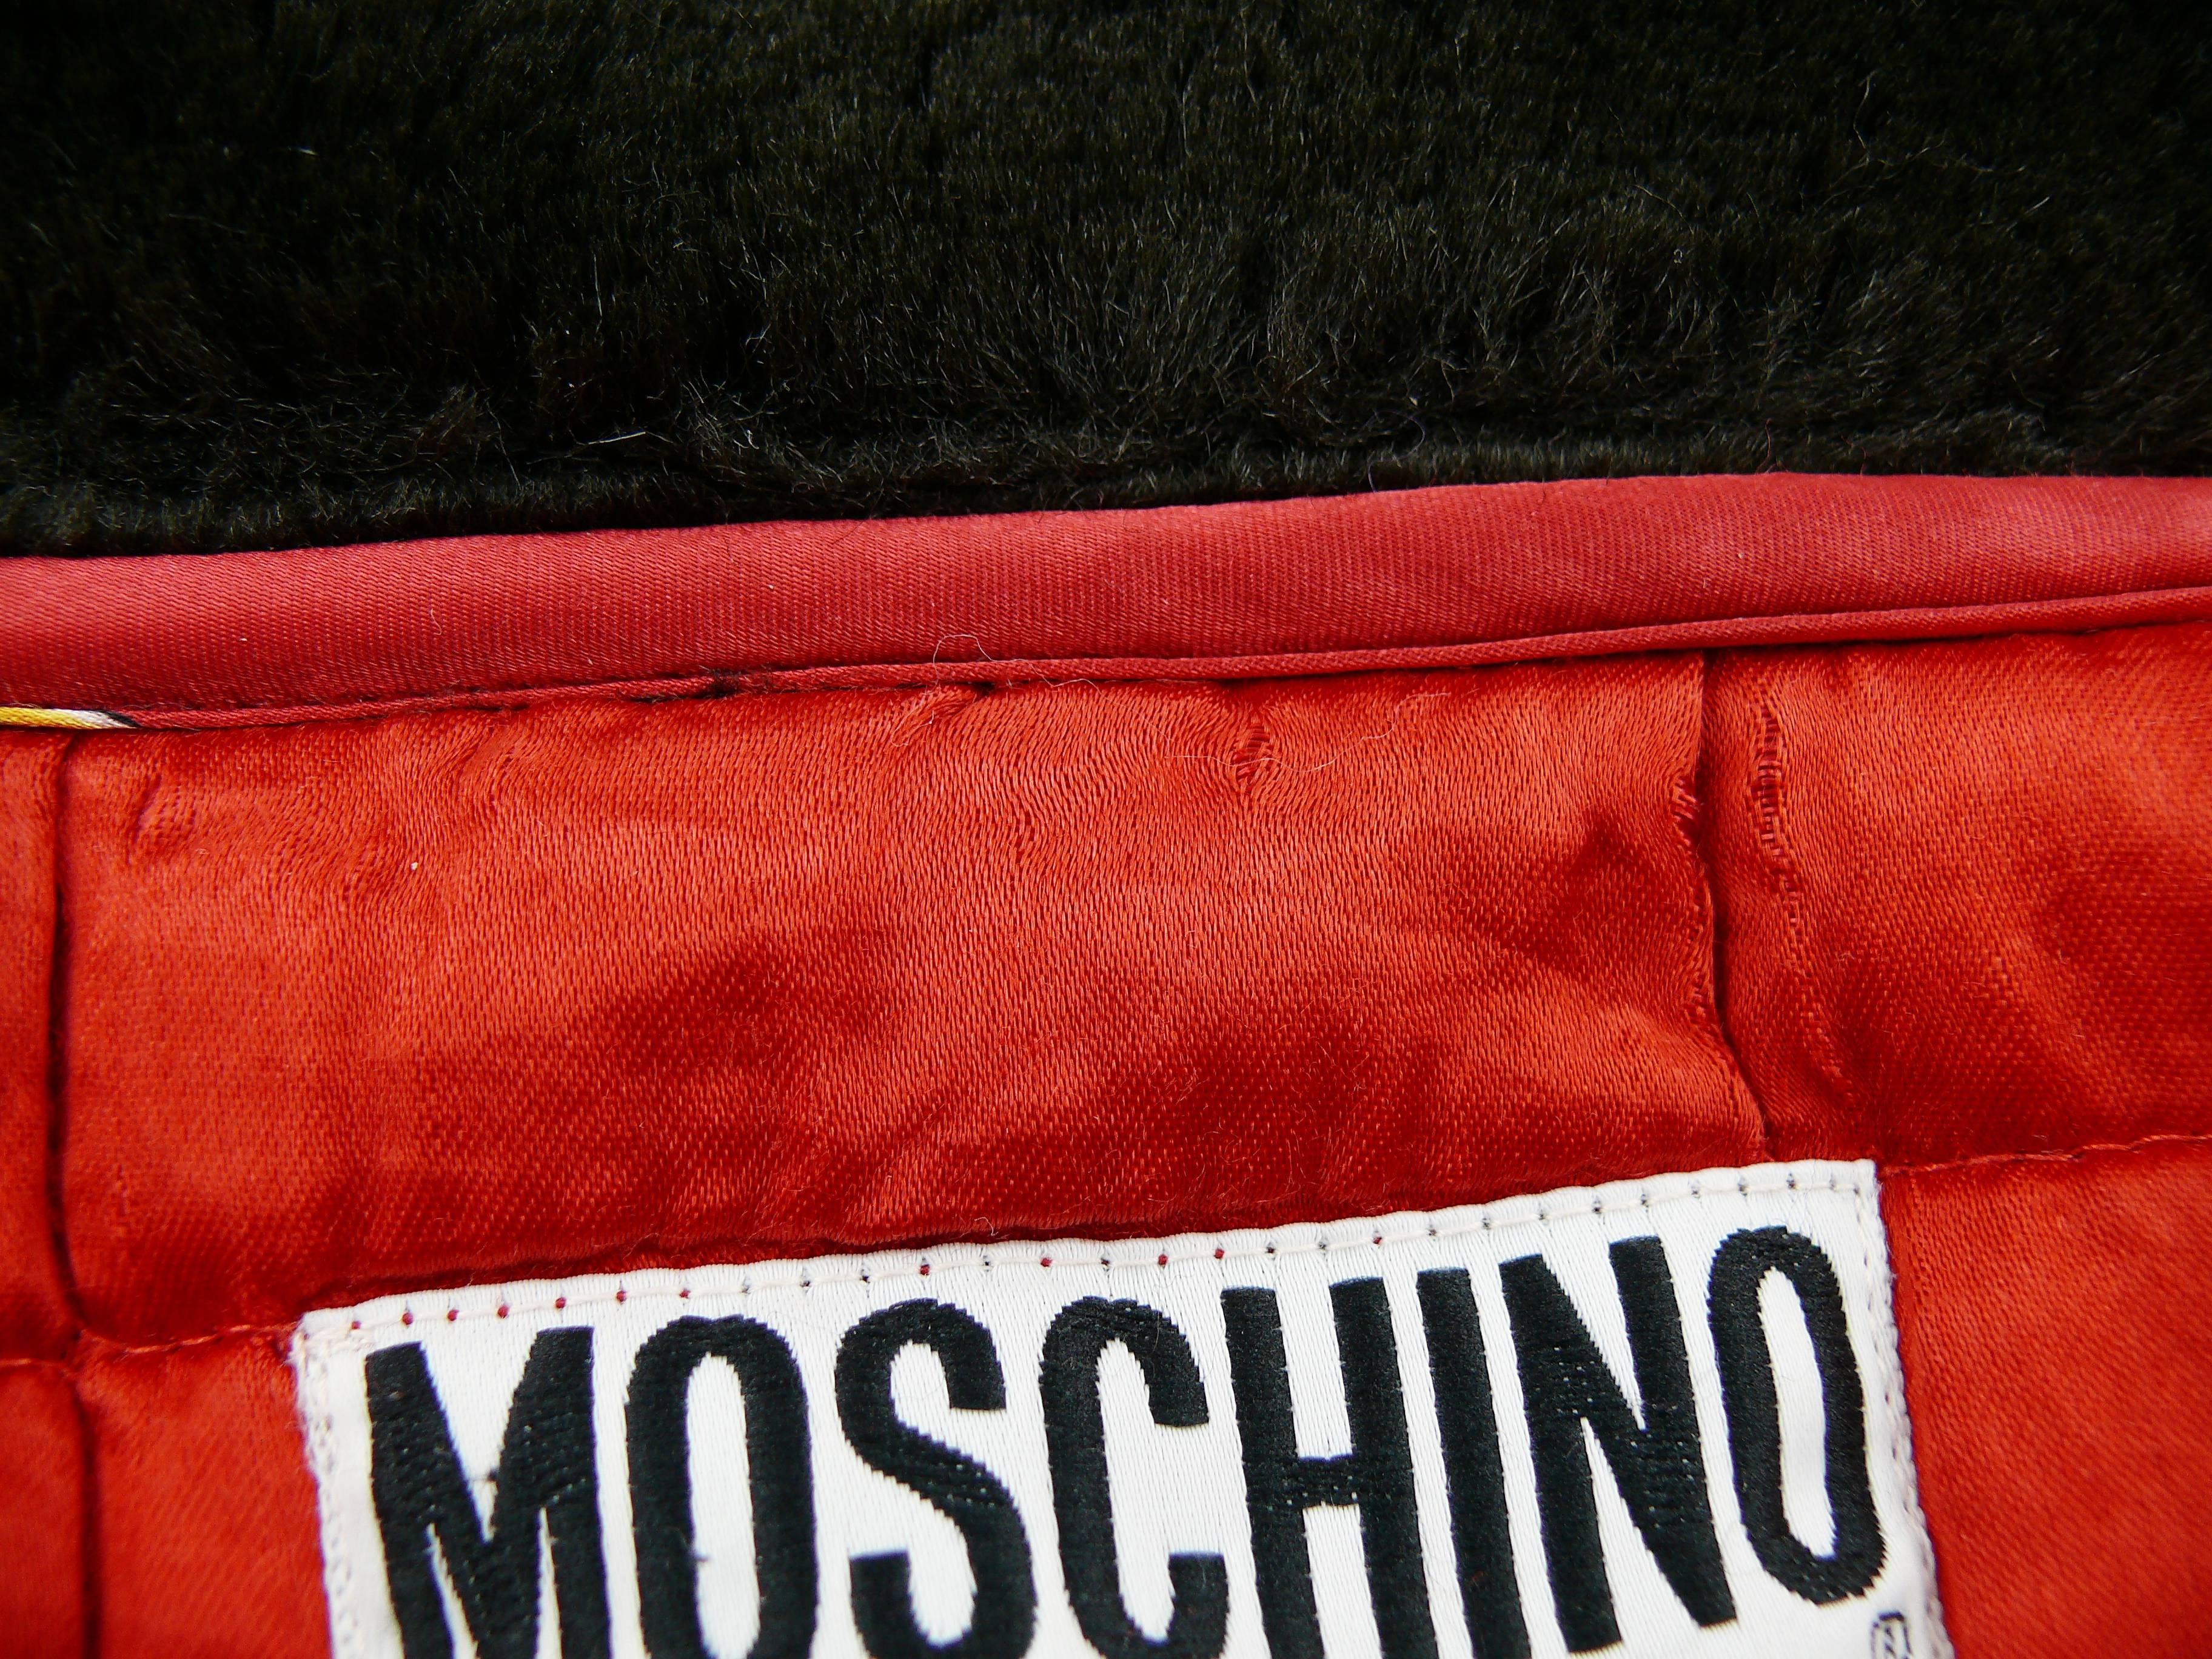 Moschino Jeans Vintage Iconic Slotter Casino Game Bomber Jacket US Size ...